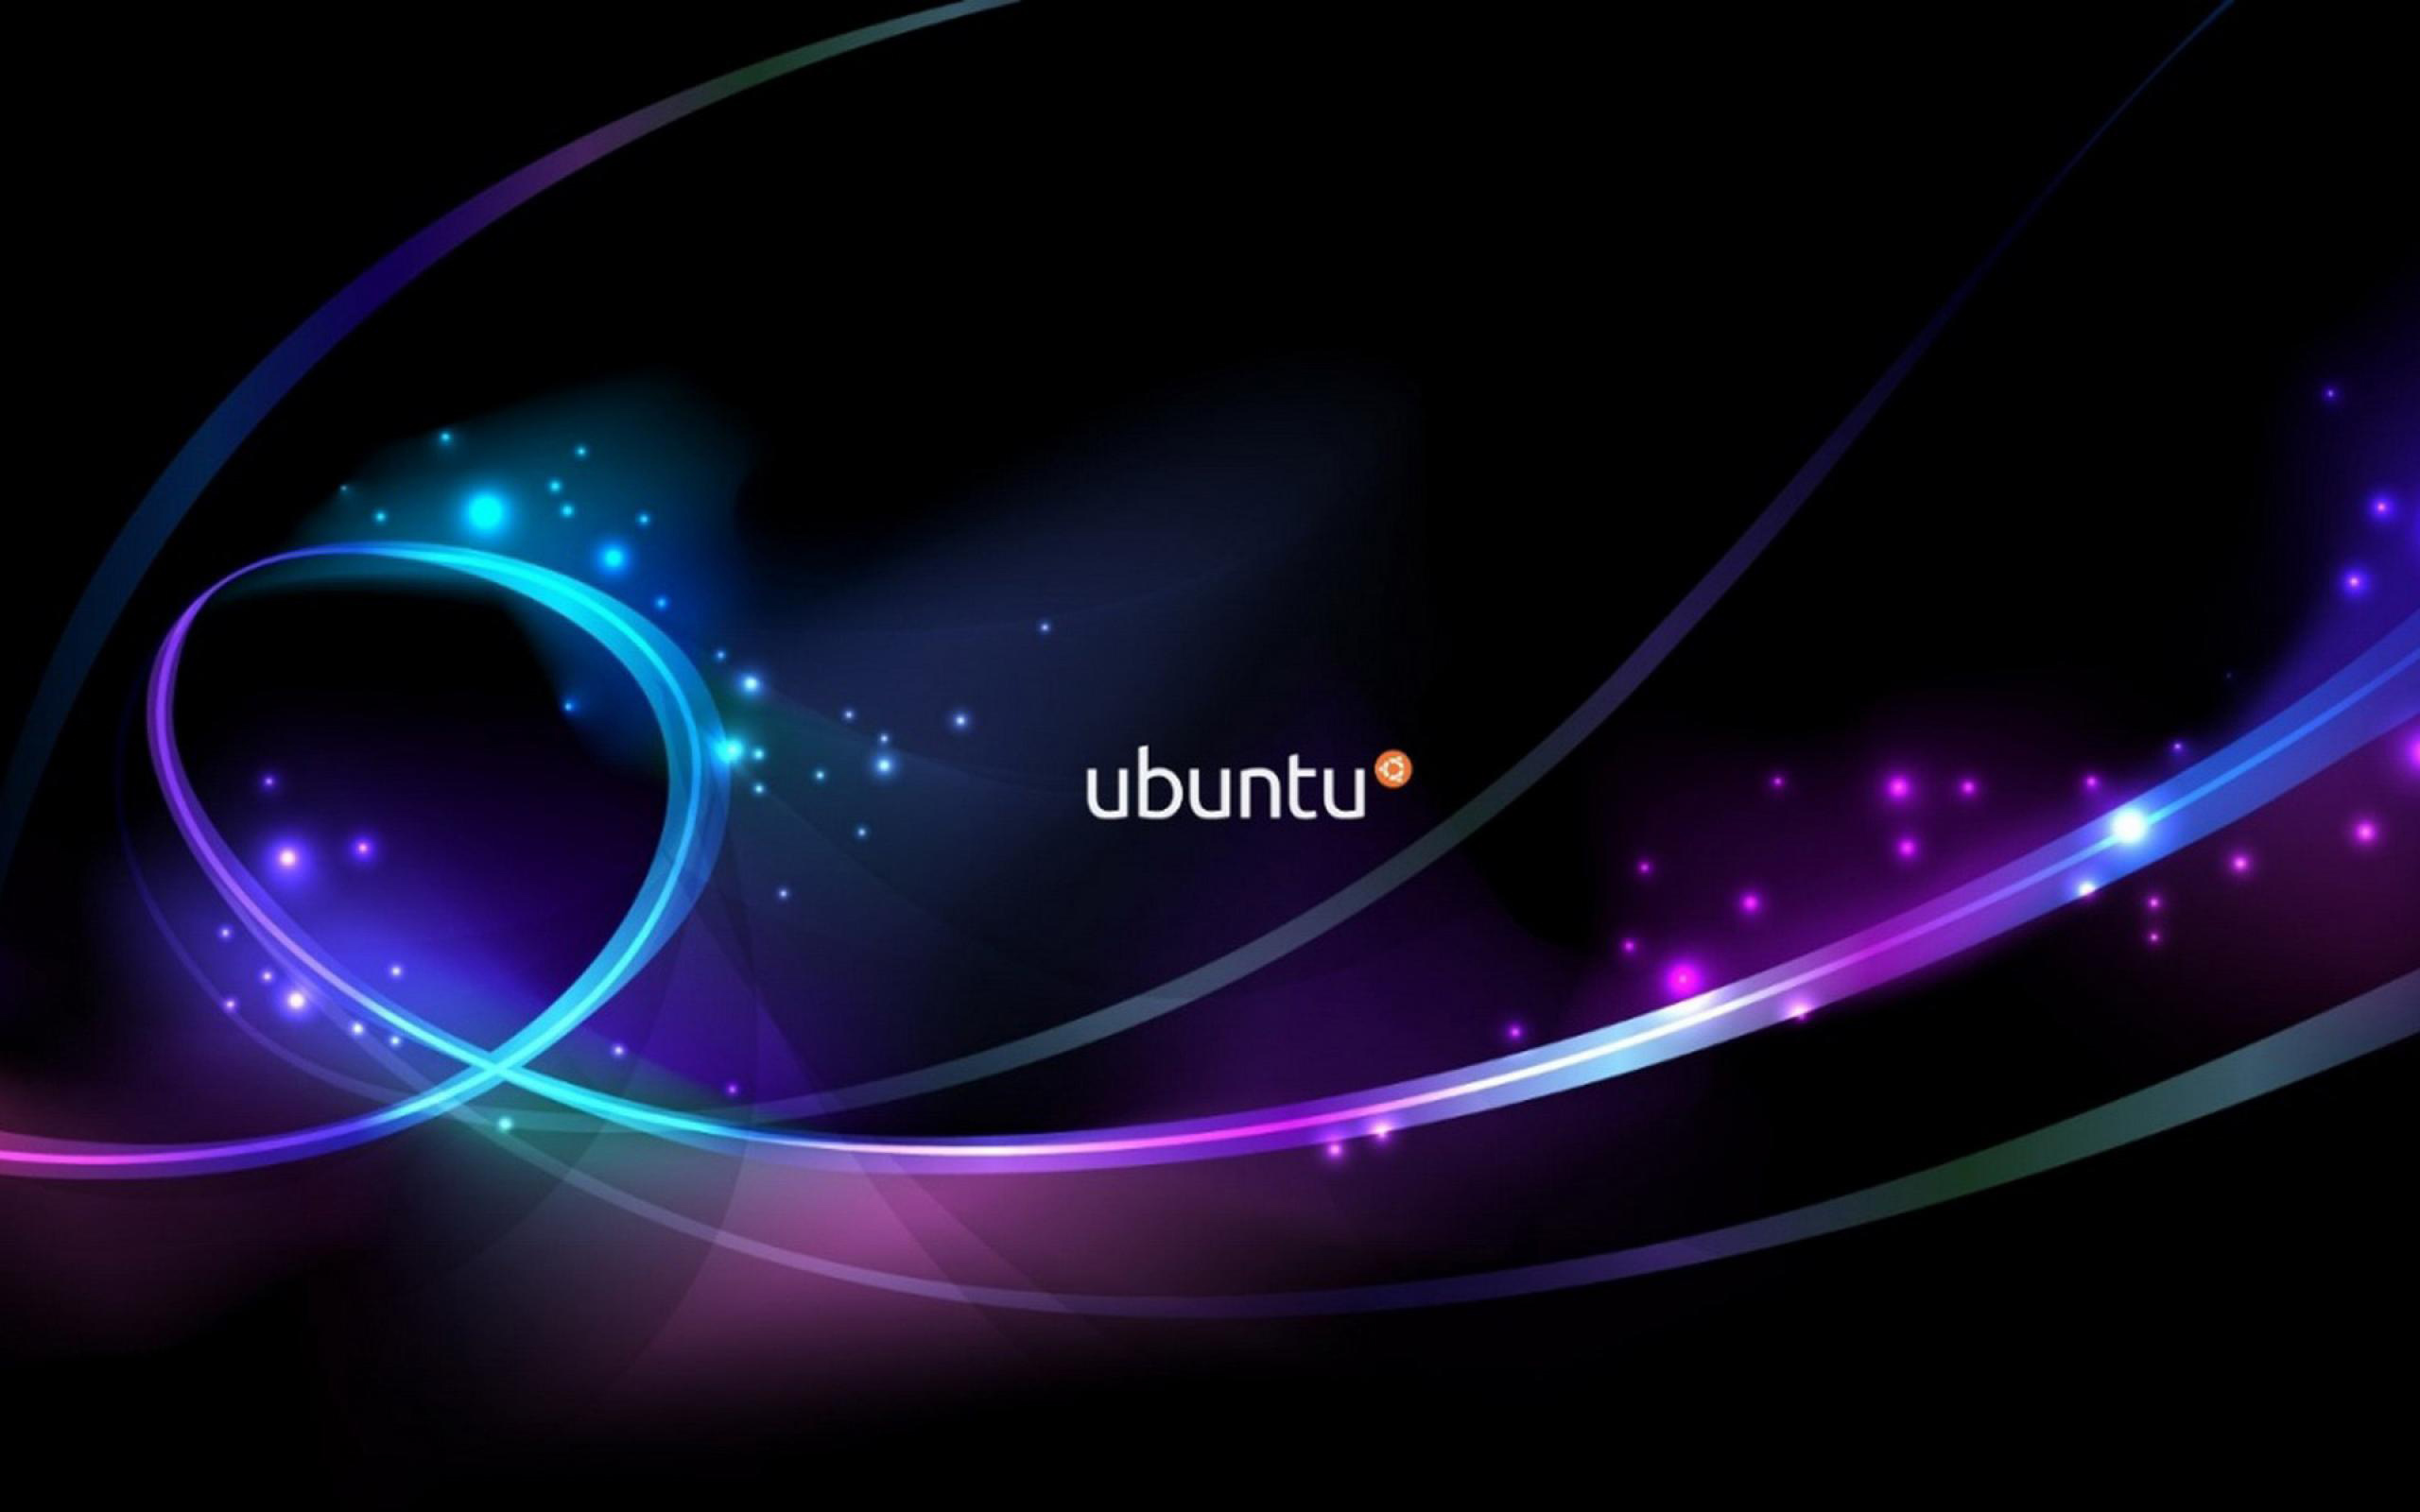 46 Free Ubuntu Wallpapers For Desktop and Laptops